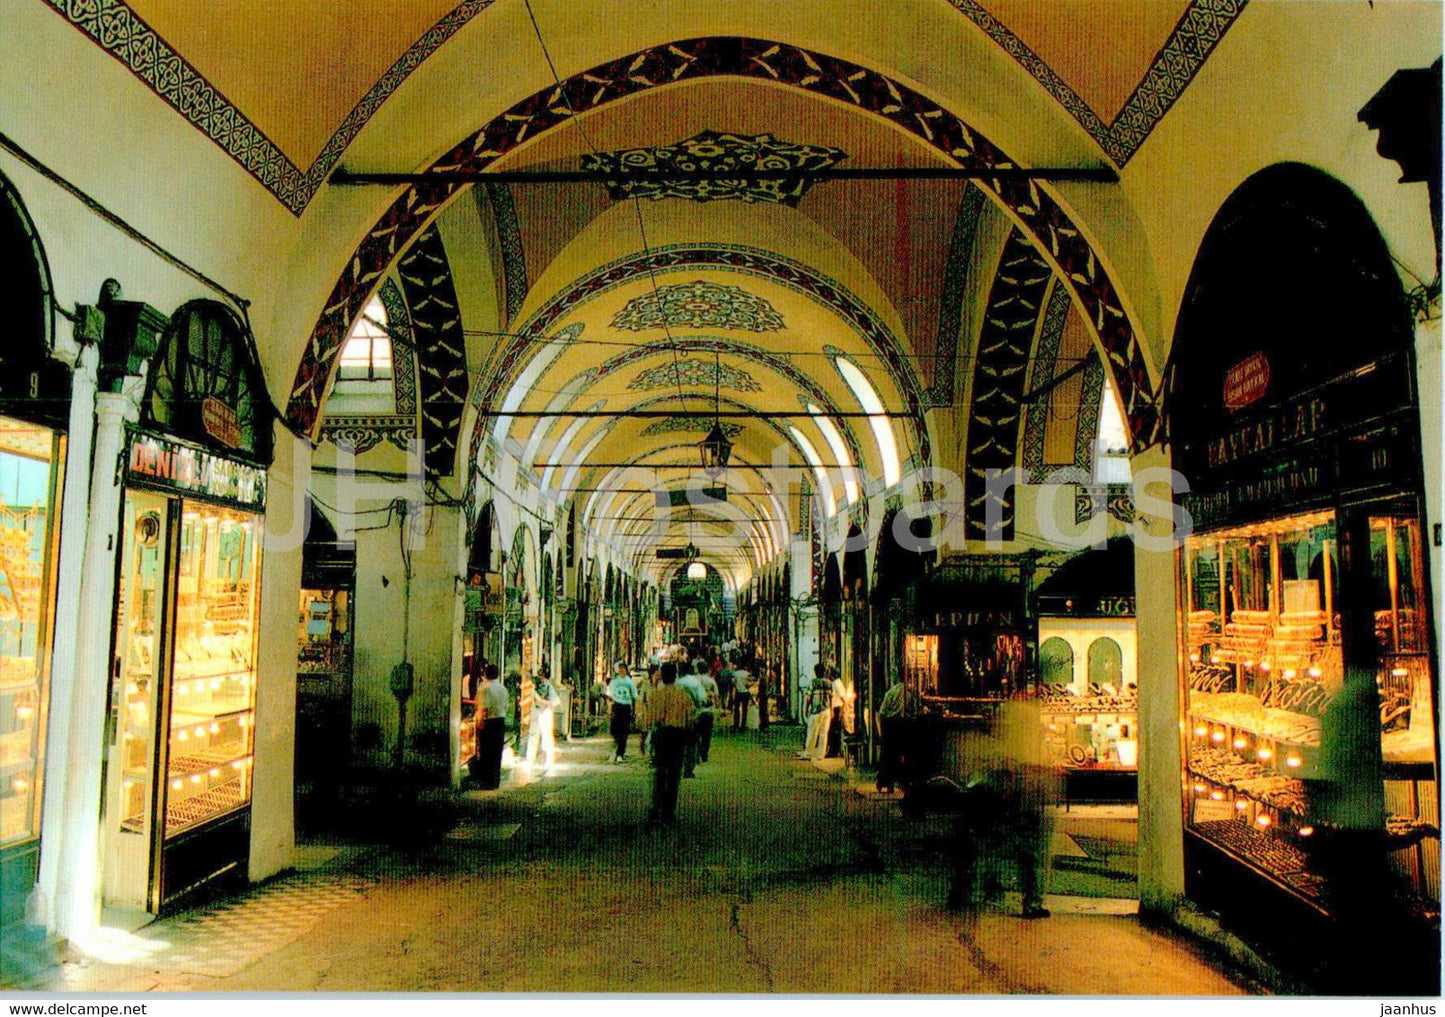 Istanbul - Interieur of Grand Bazaar - 34-45 - Turkey - unused - JH Postcards